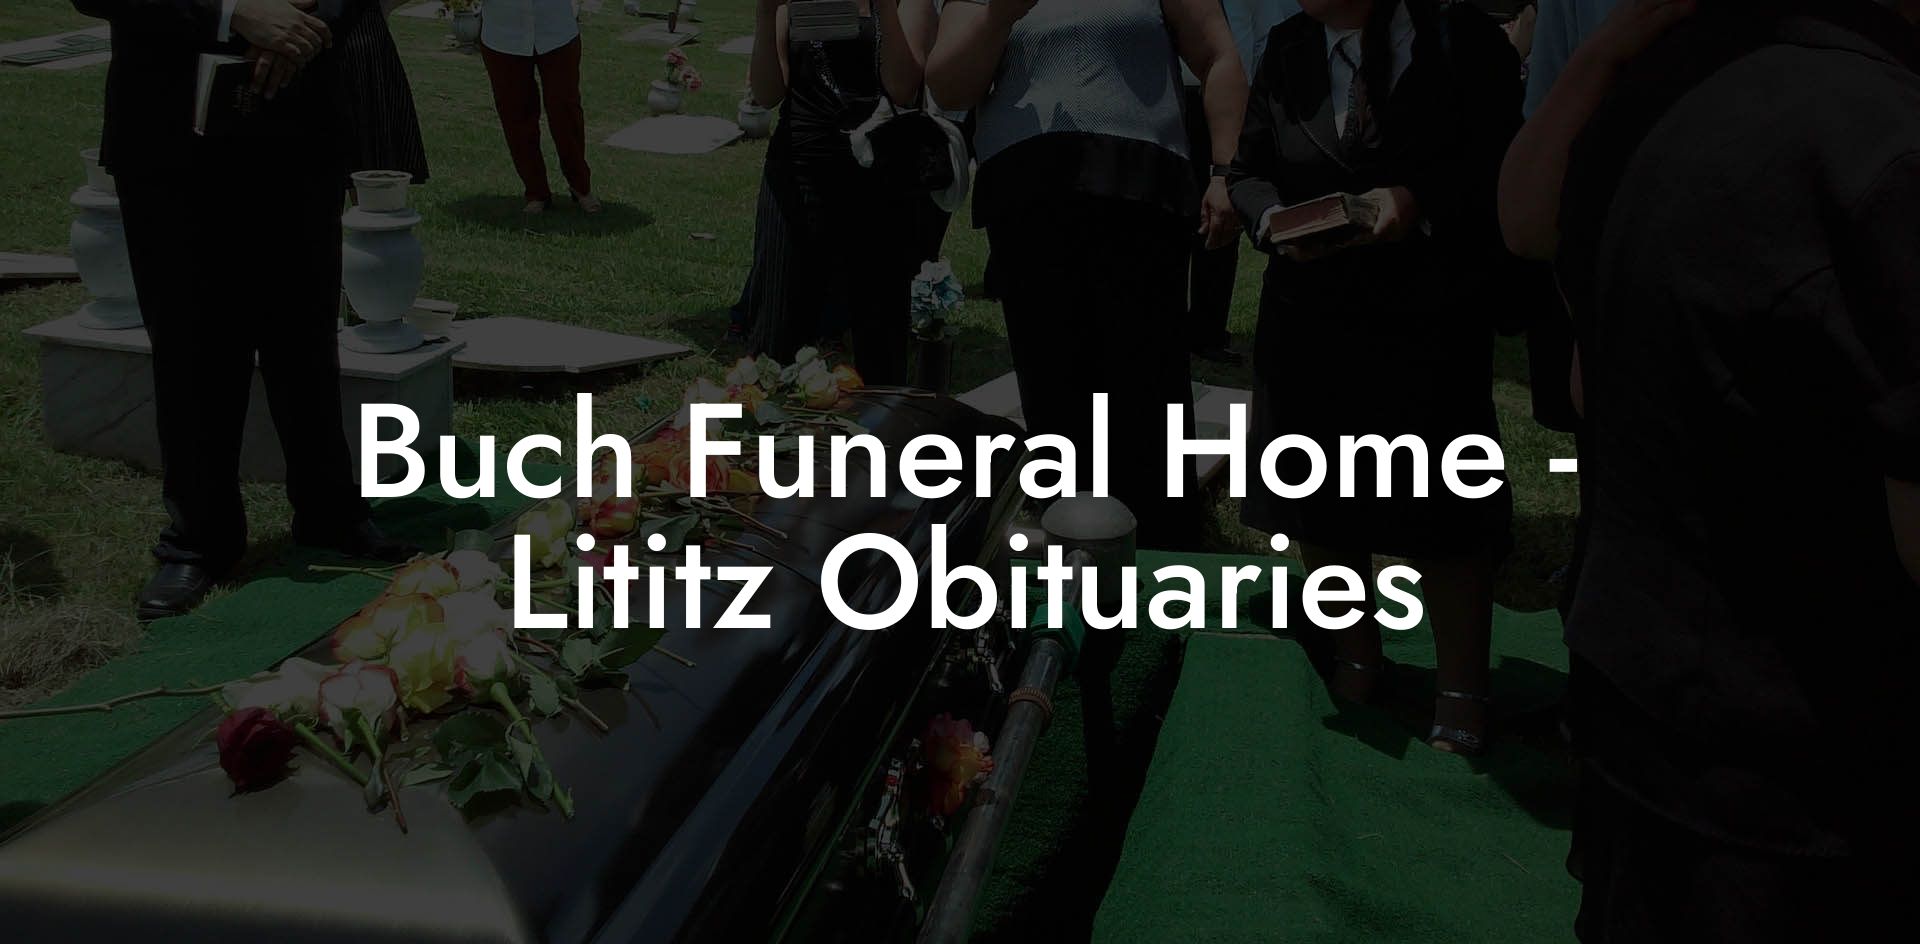 Buch Funeral Home - Lititz Obituaries